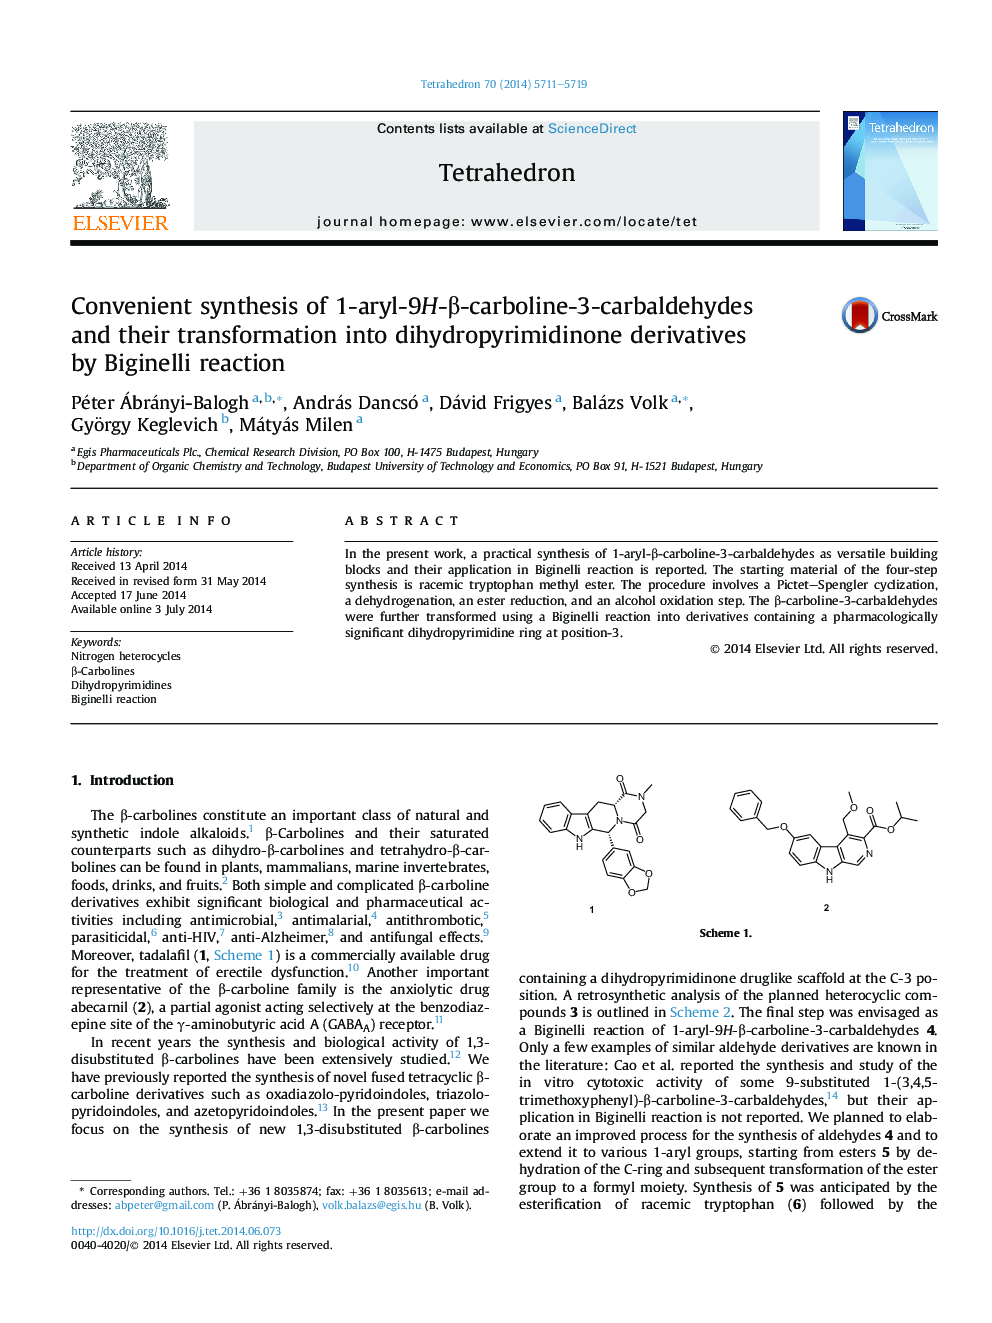 Convenient synthesis of 1-aryl-9H-Î²-carboline-3-carbaldehydes andÂ their transformation into dihydropyrimidinone derivatives byÂ Biginelli reaction